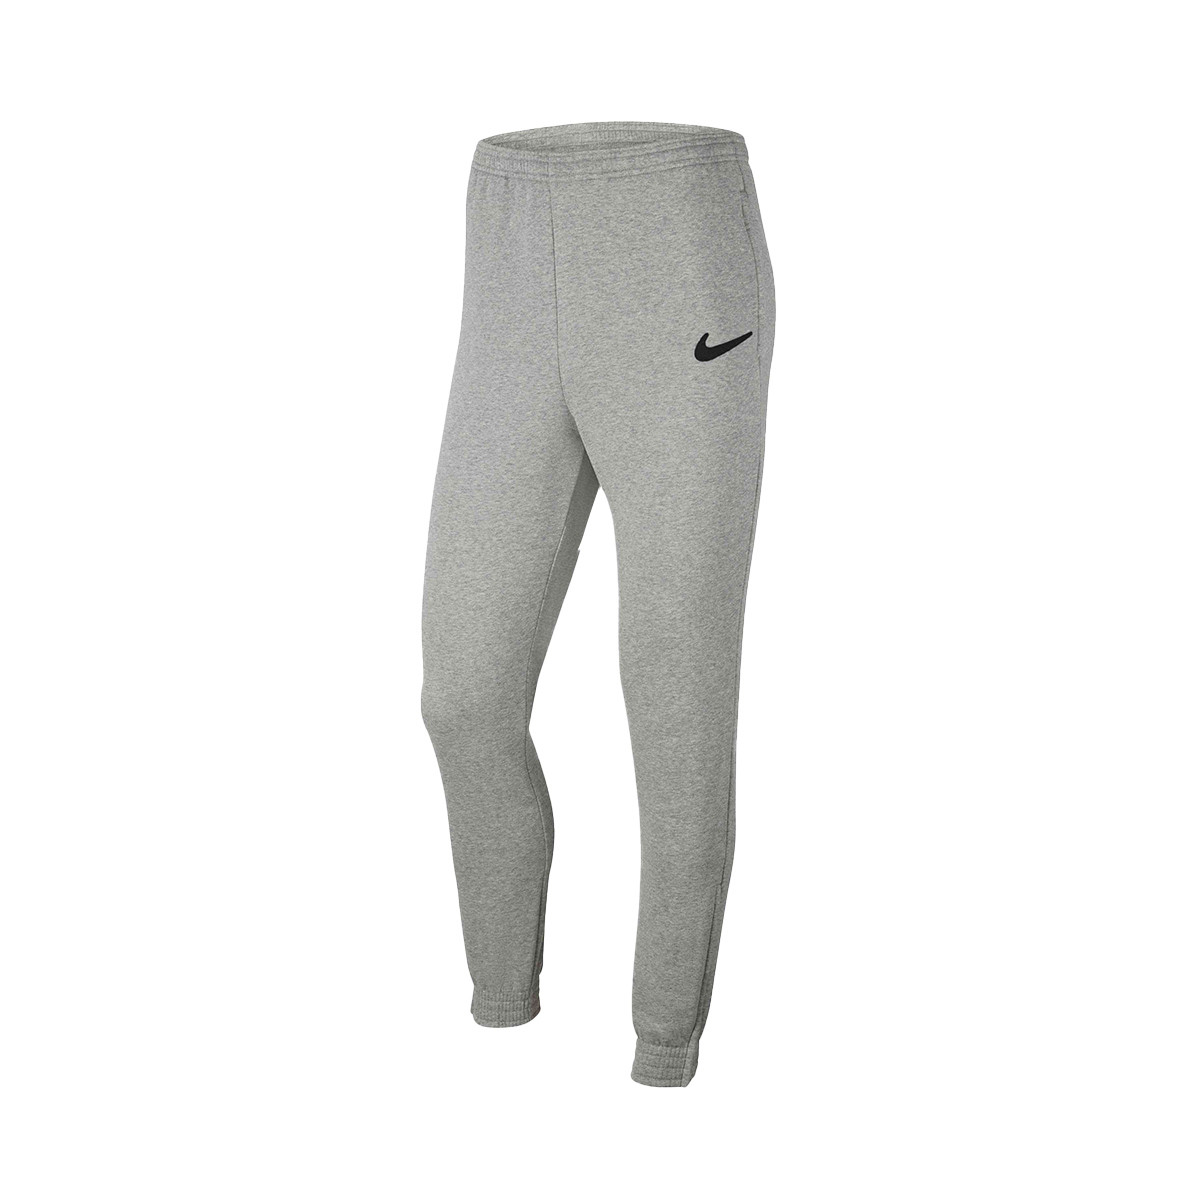 Pantalón largo Nike Team 20 Dark Grey-Black - Fútbol